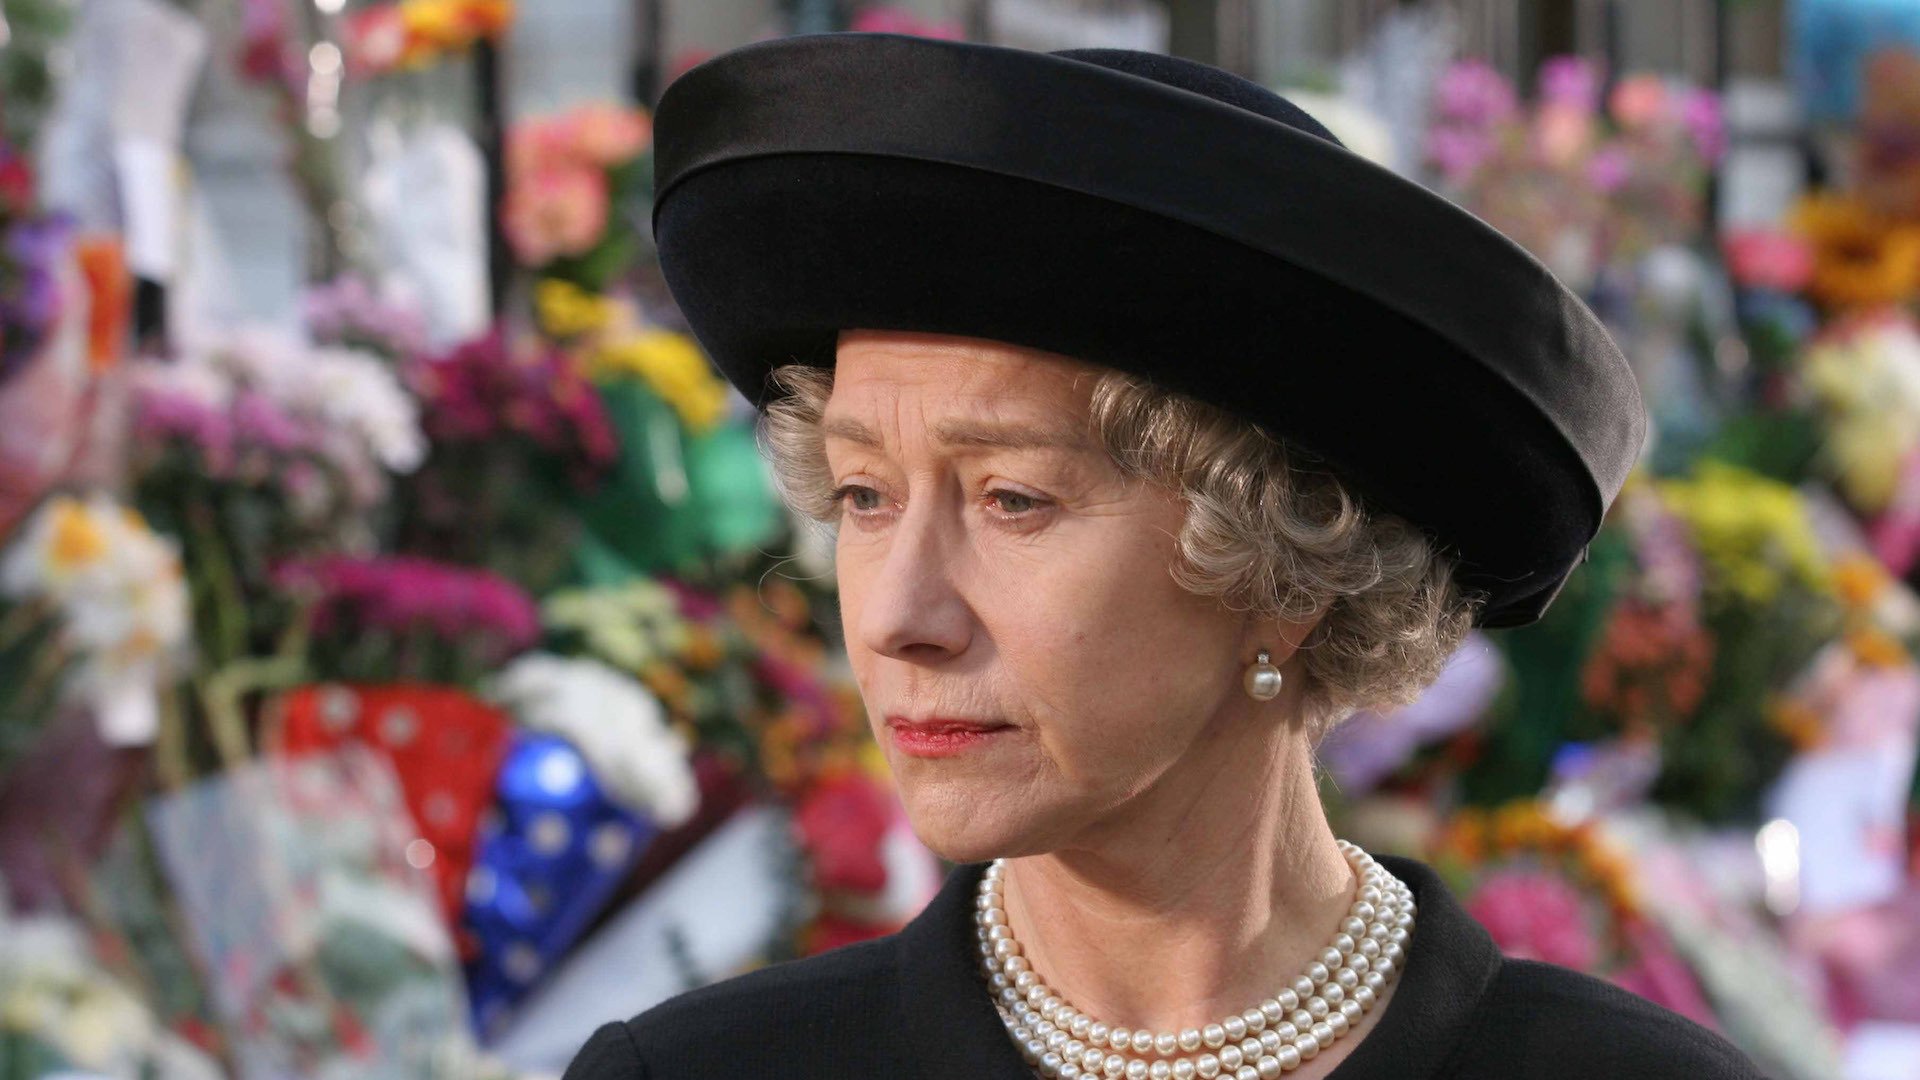 All the times Queen Elizabeth II was portrayed in films